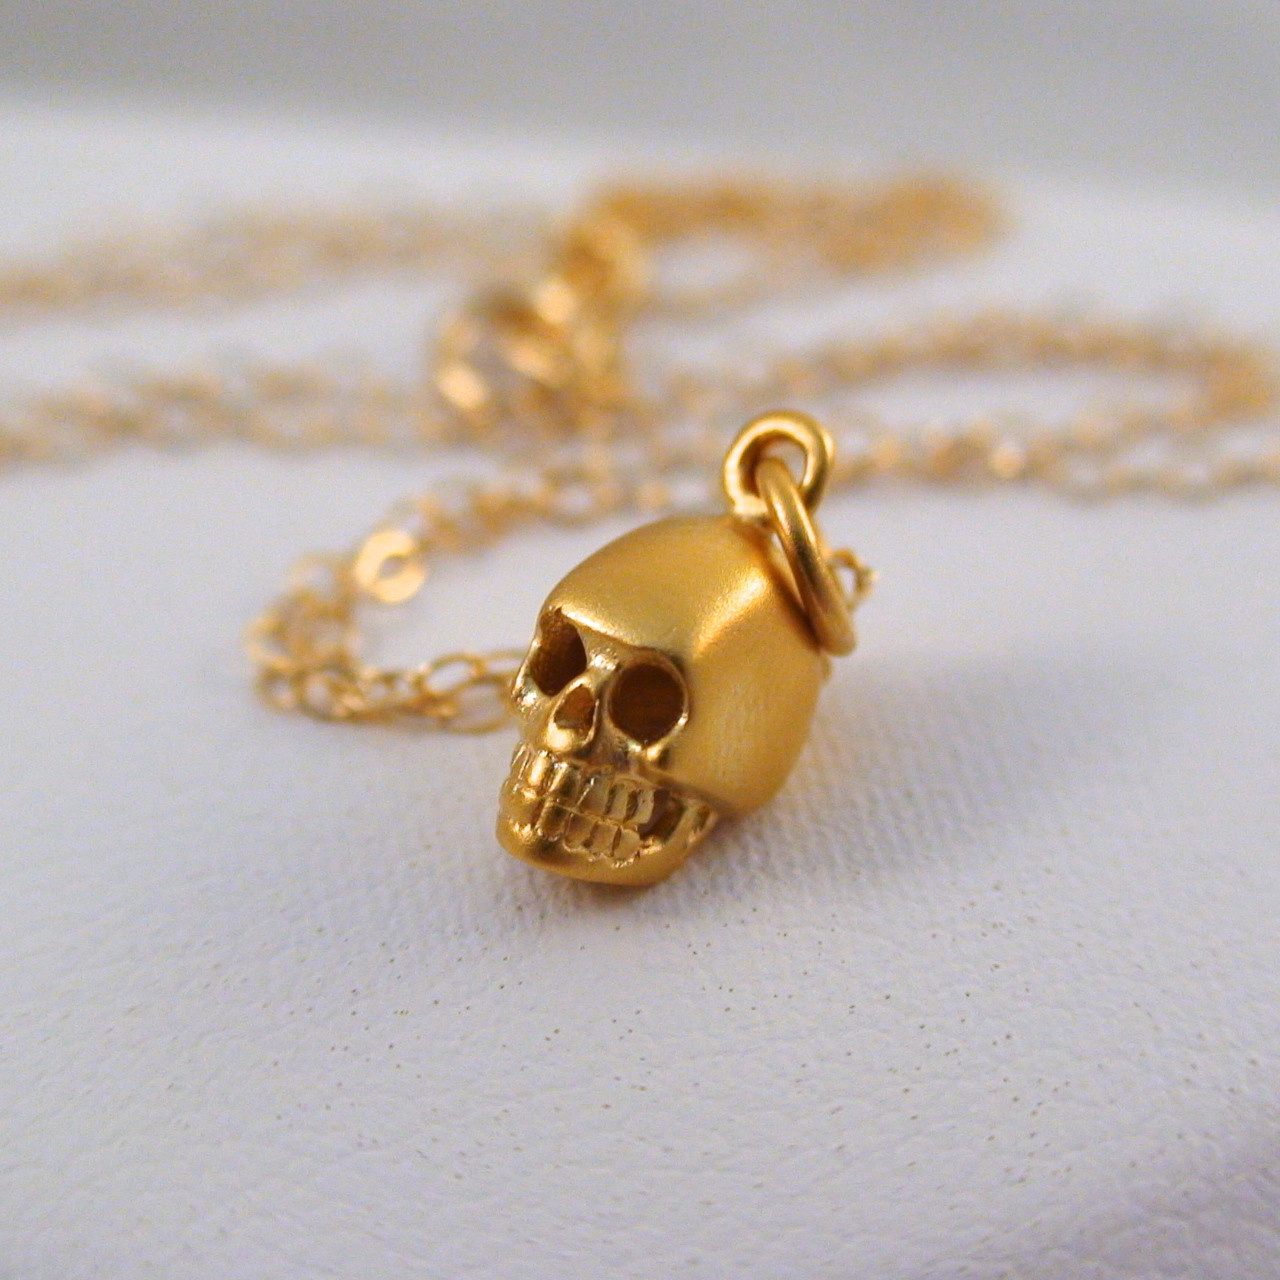 3D Gold Skull Necklace 925 Sterling Silver